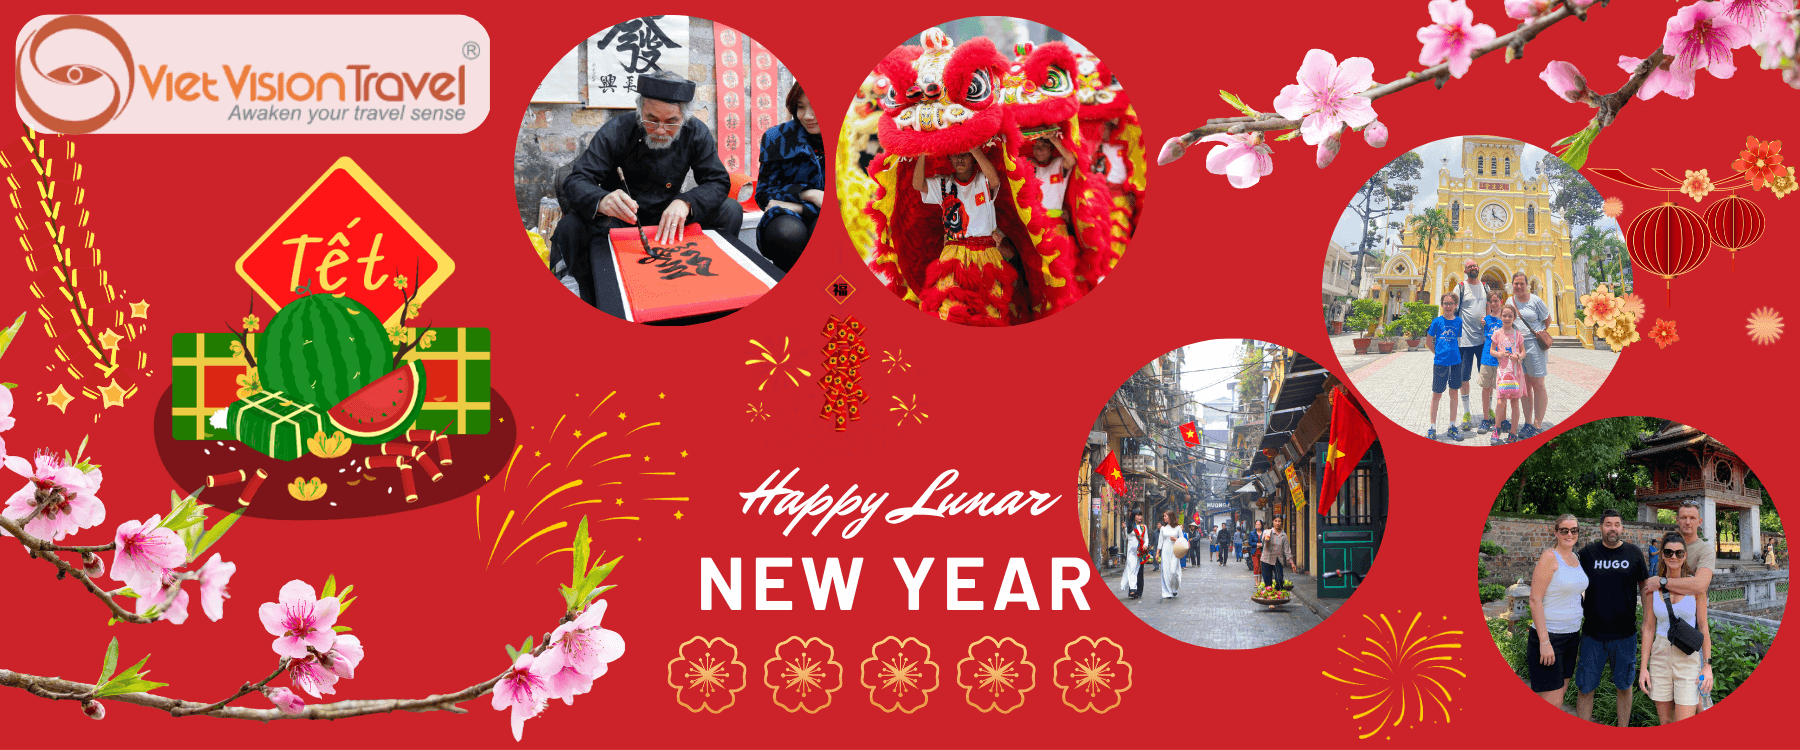 Happy Lunar New Year - Vietnam Vacation